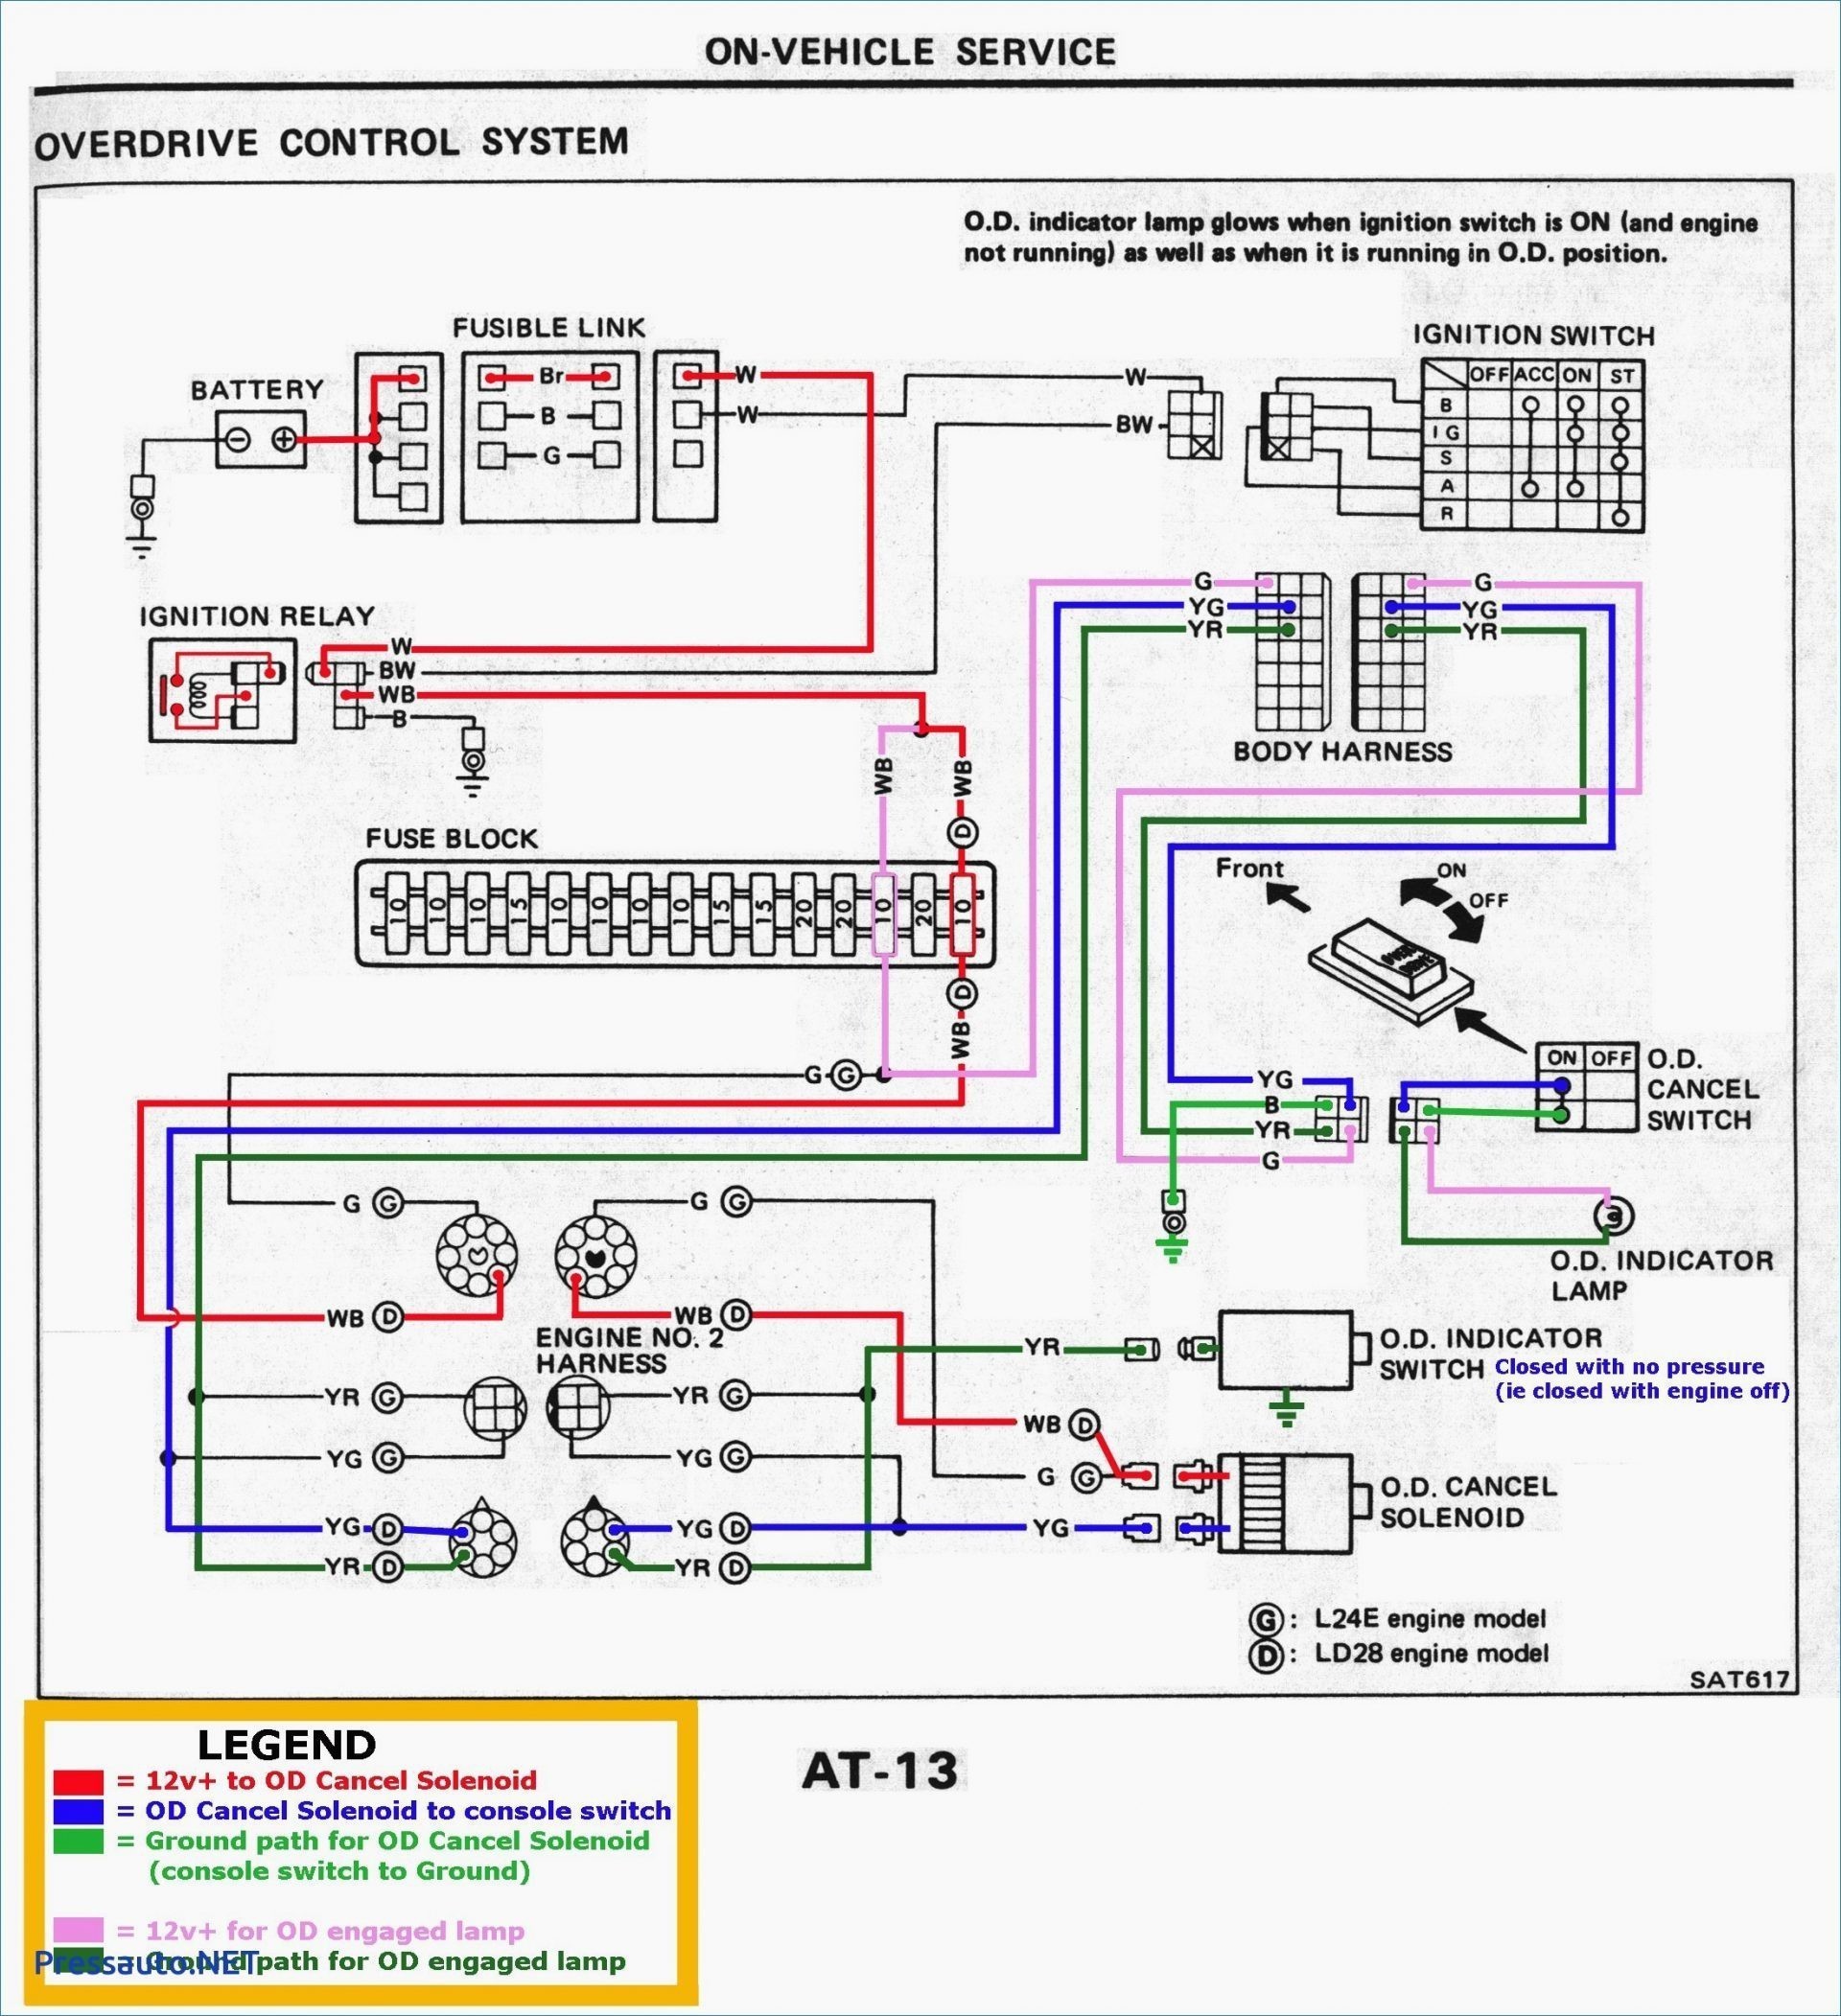 Klipsch Promedia 2 1 Wiring Diagram Wiring Diagram 20 Amp Plug New Klipsch Promedia 2 1 Wiring Diagram Of Klipsch Promedia 2 1 Wiring Diagram